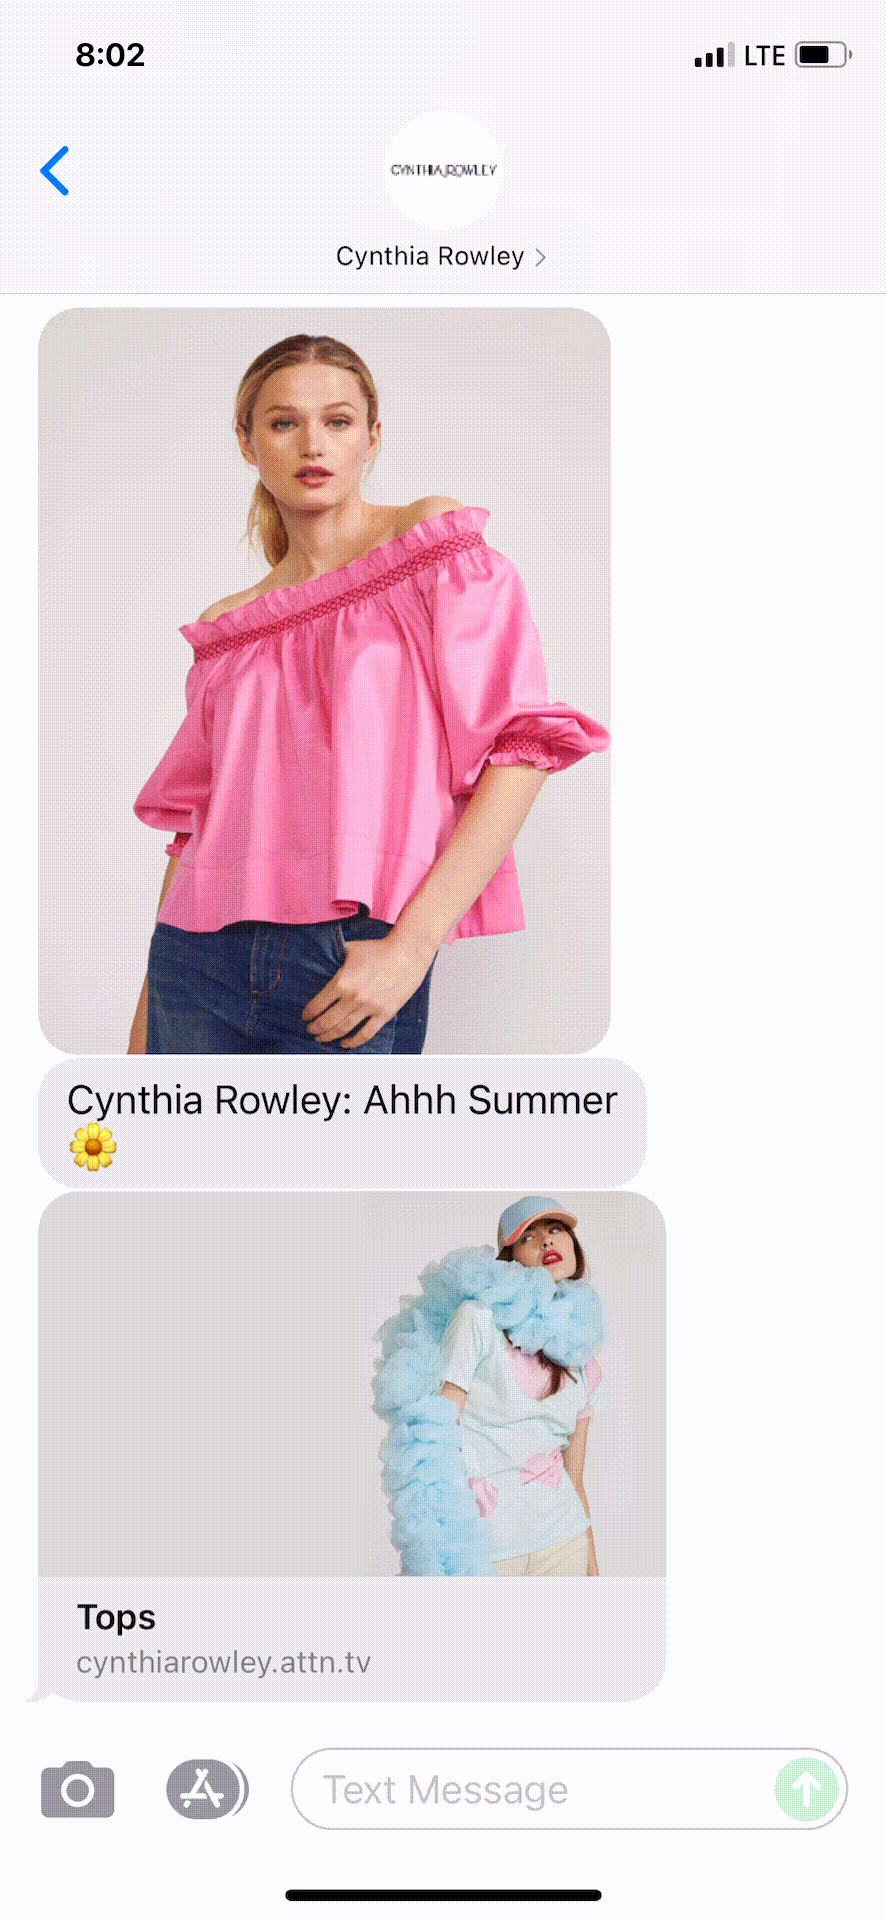 Cynthia-Rowley-Text-Message-Marketing-Example-06.26.2021